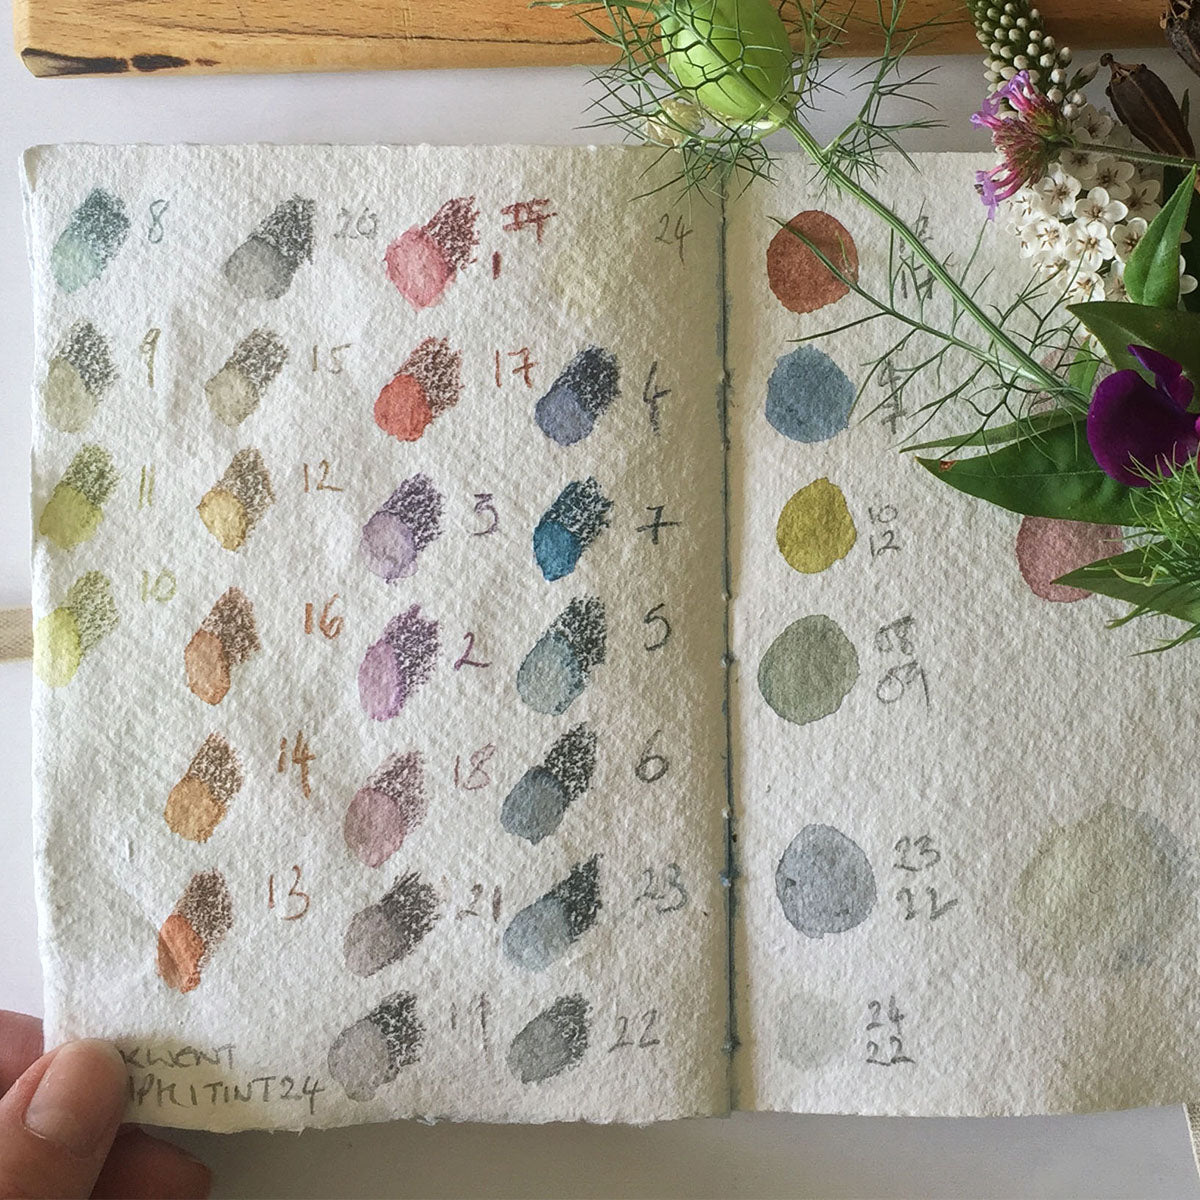 210gsm handmade cotton rag paper sketchbook for all dry and wet art media 